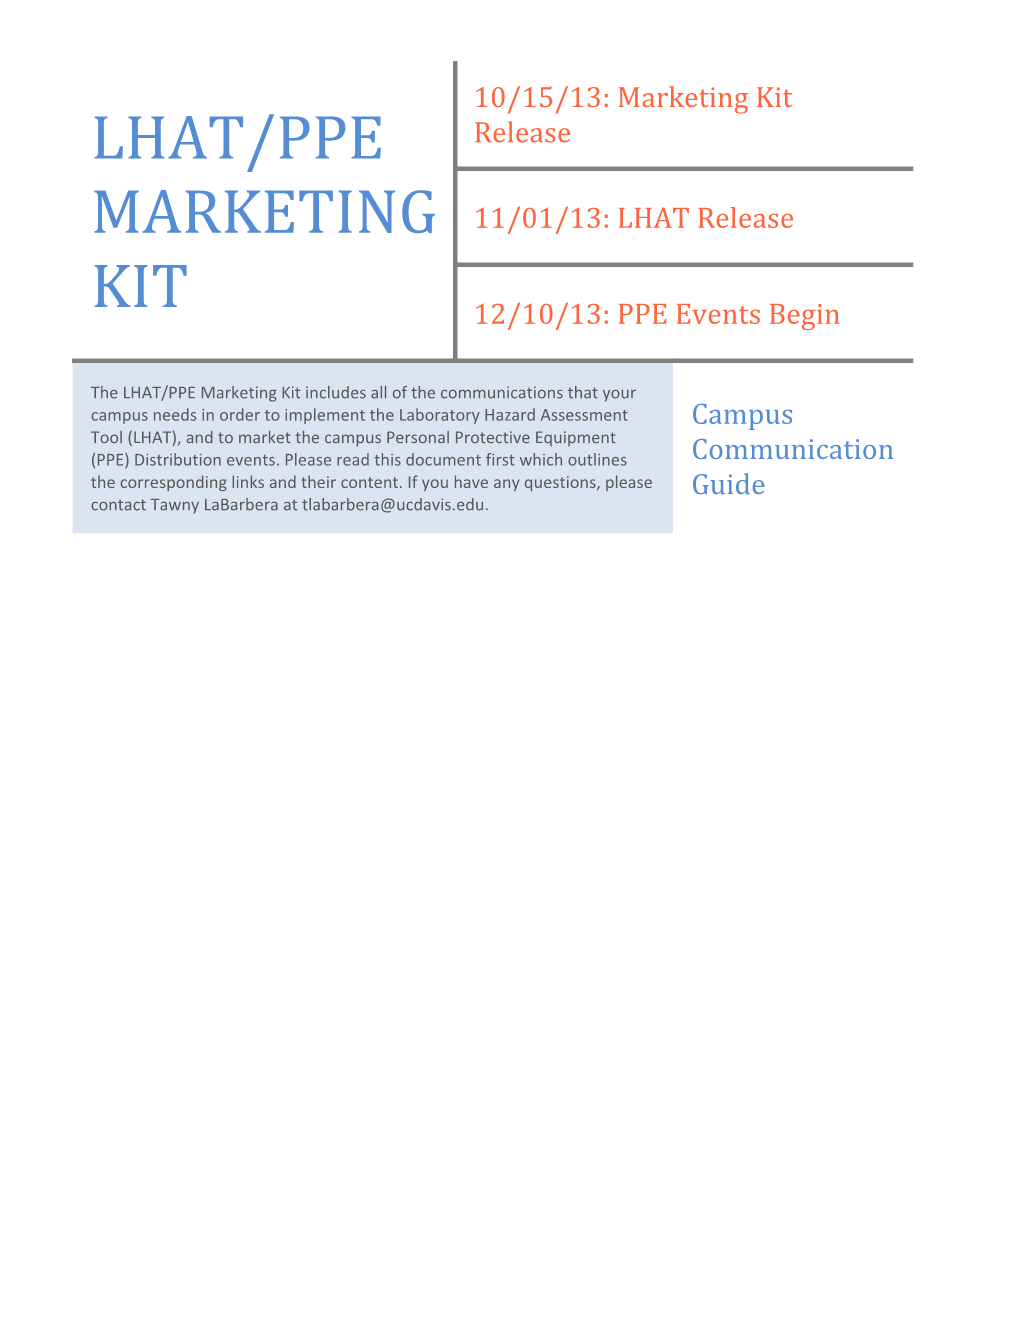 Lhat/Ppe Marketing Kit